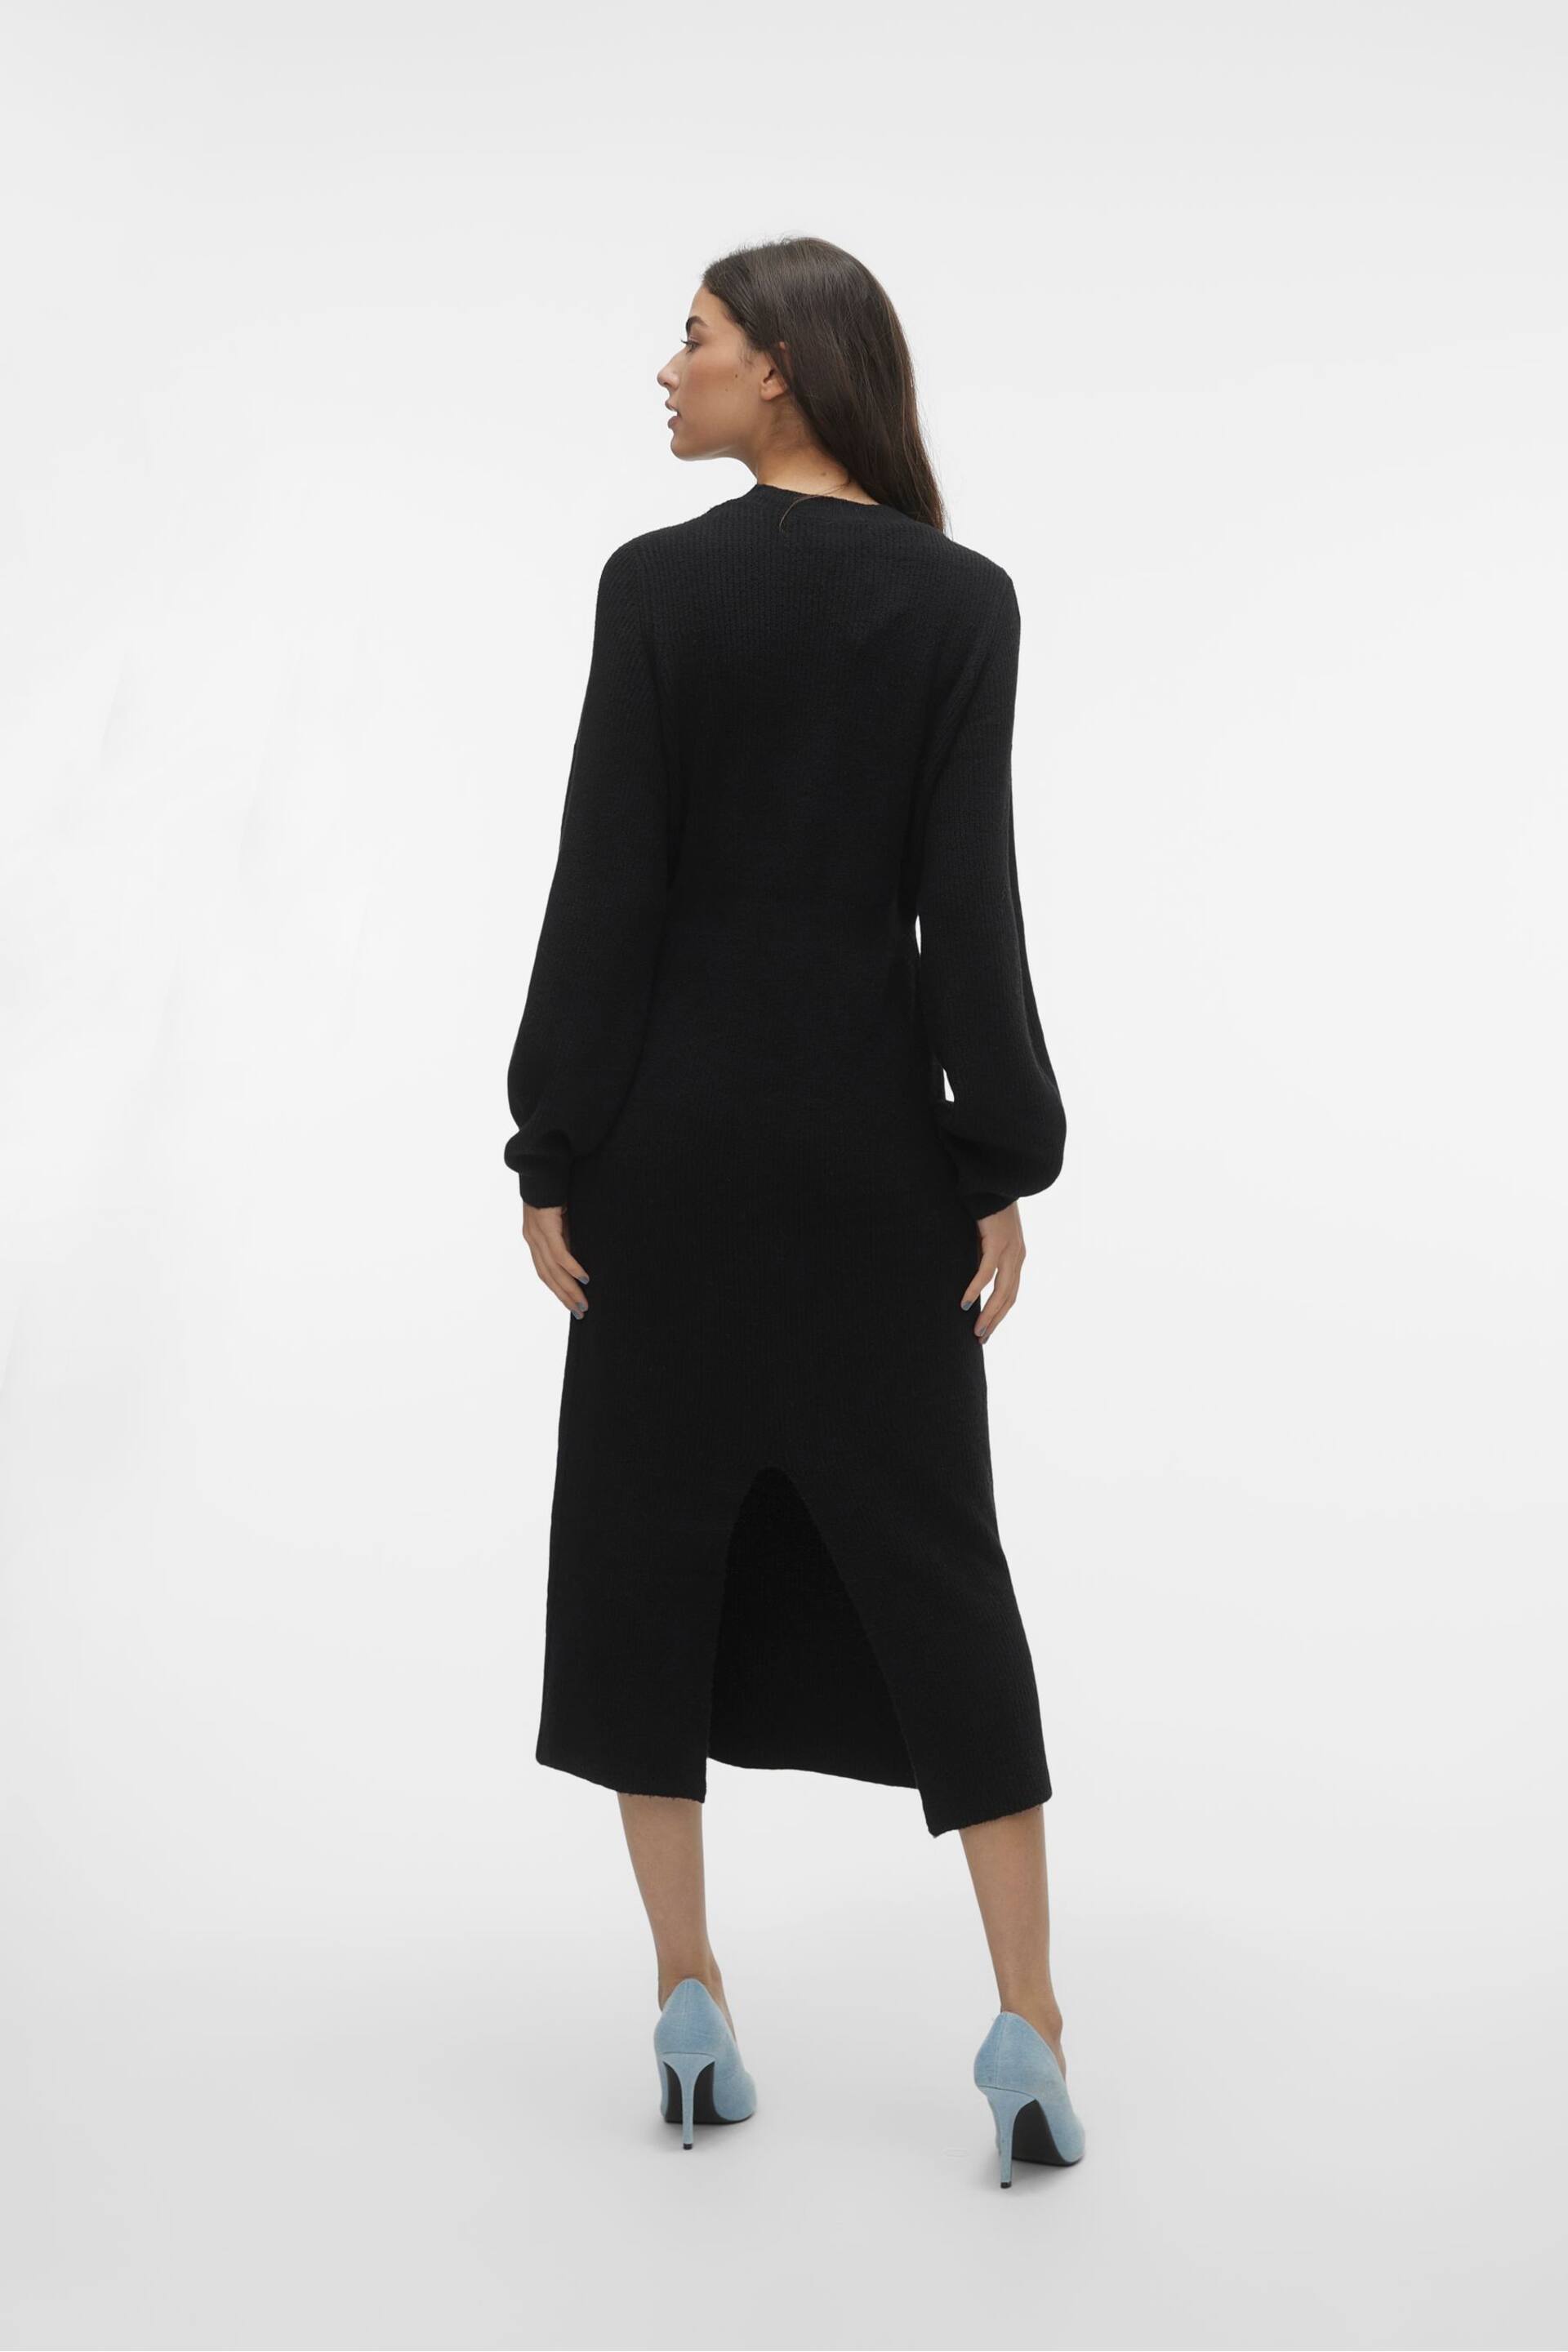 VERO MODA Black Waisted Long Sleeve Midi Knitted Jumper Dress - Image 2 of 5